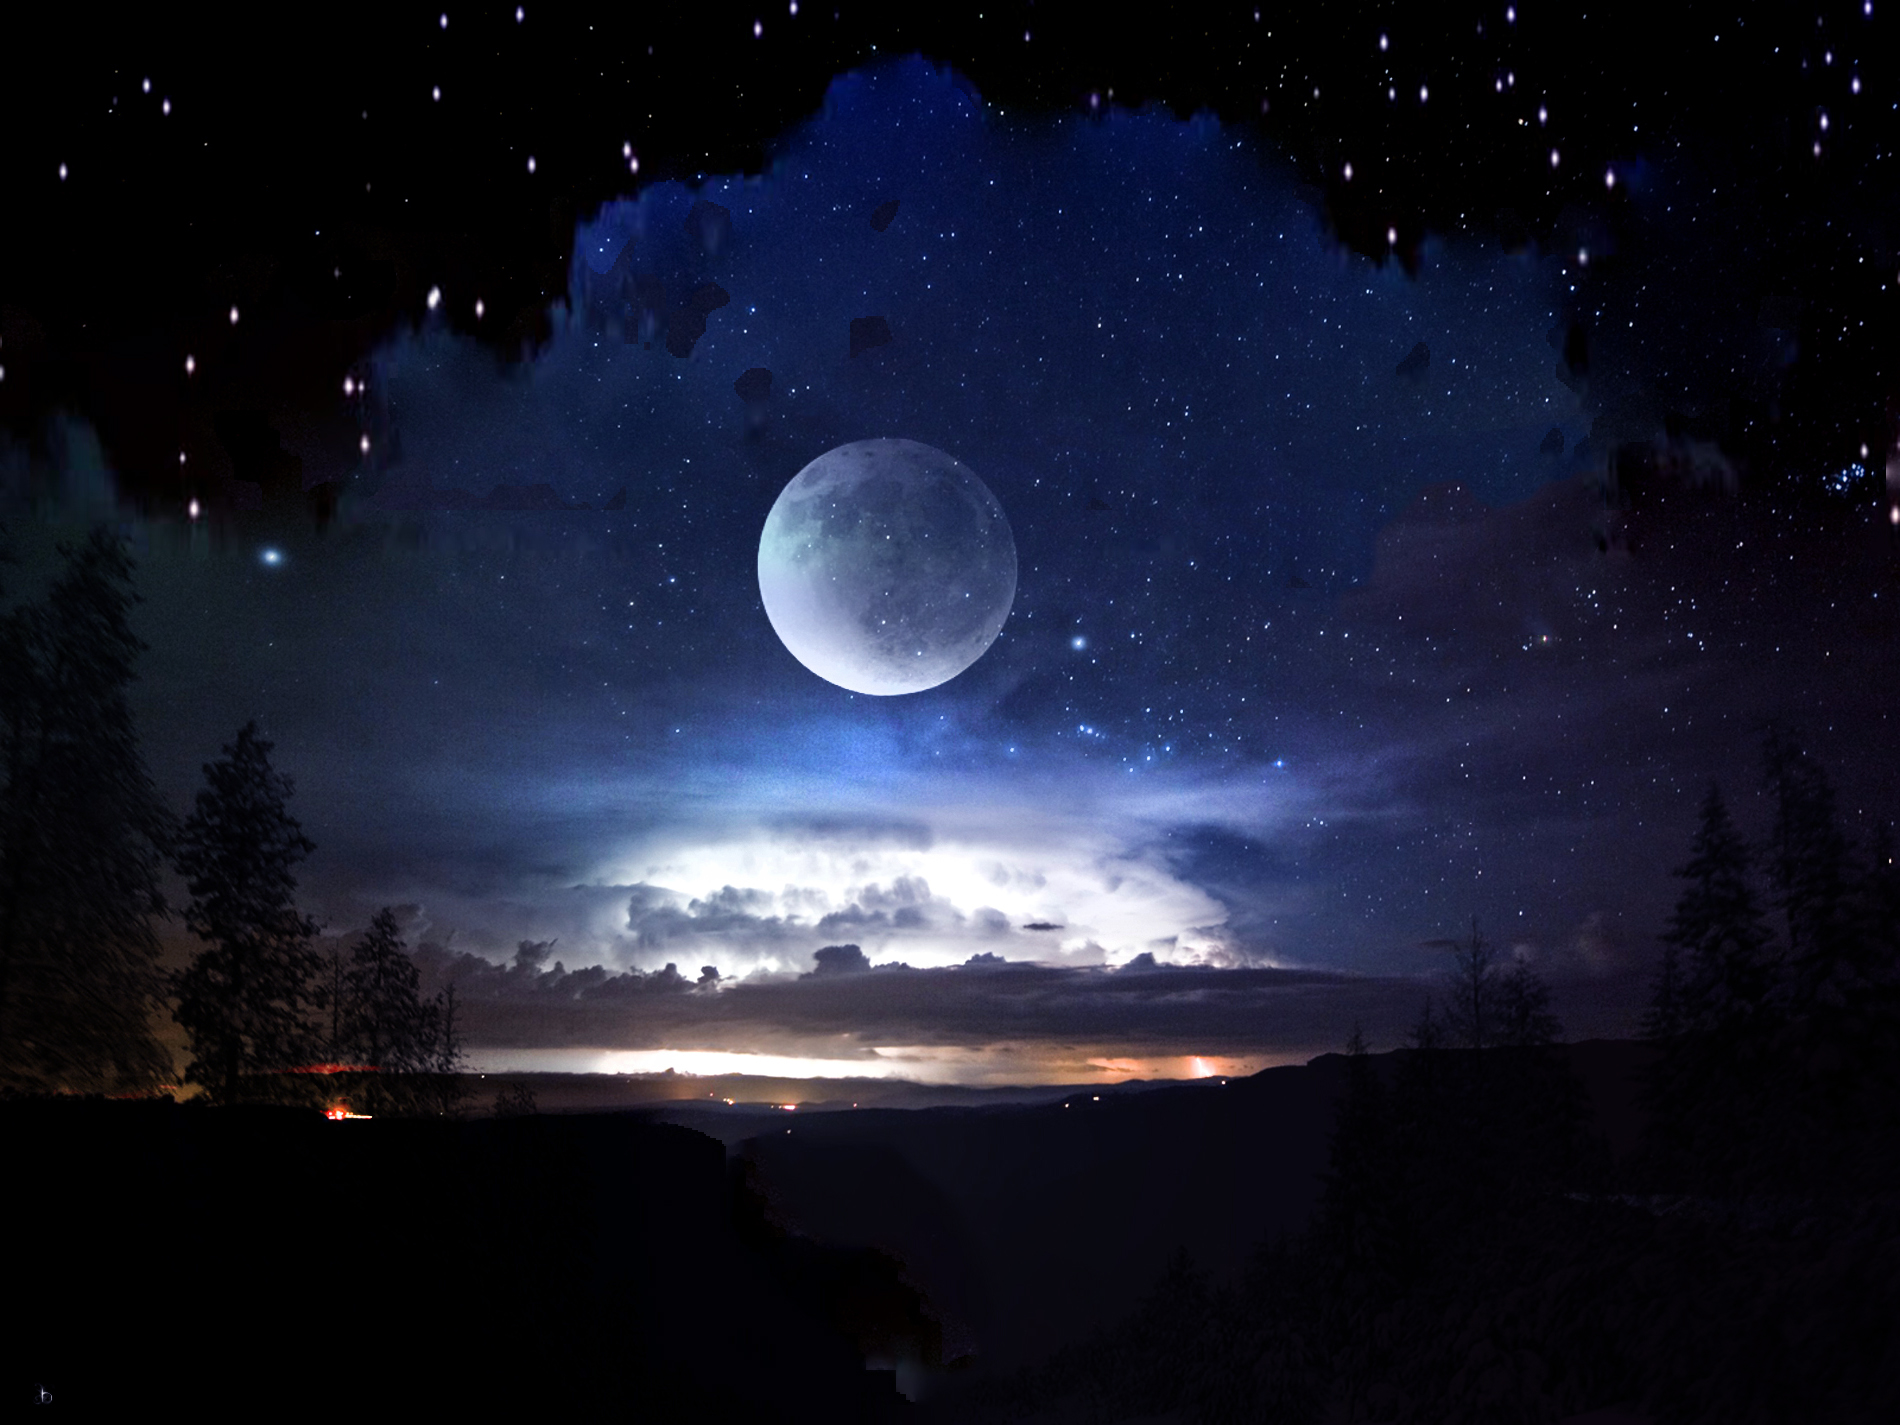 Moon And Stars Desktop Wallpaper